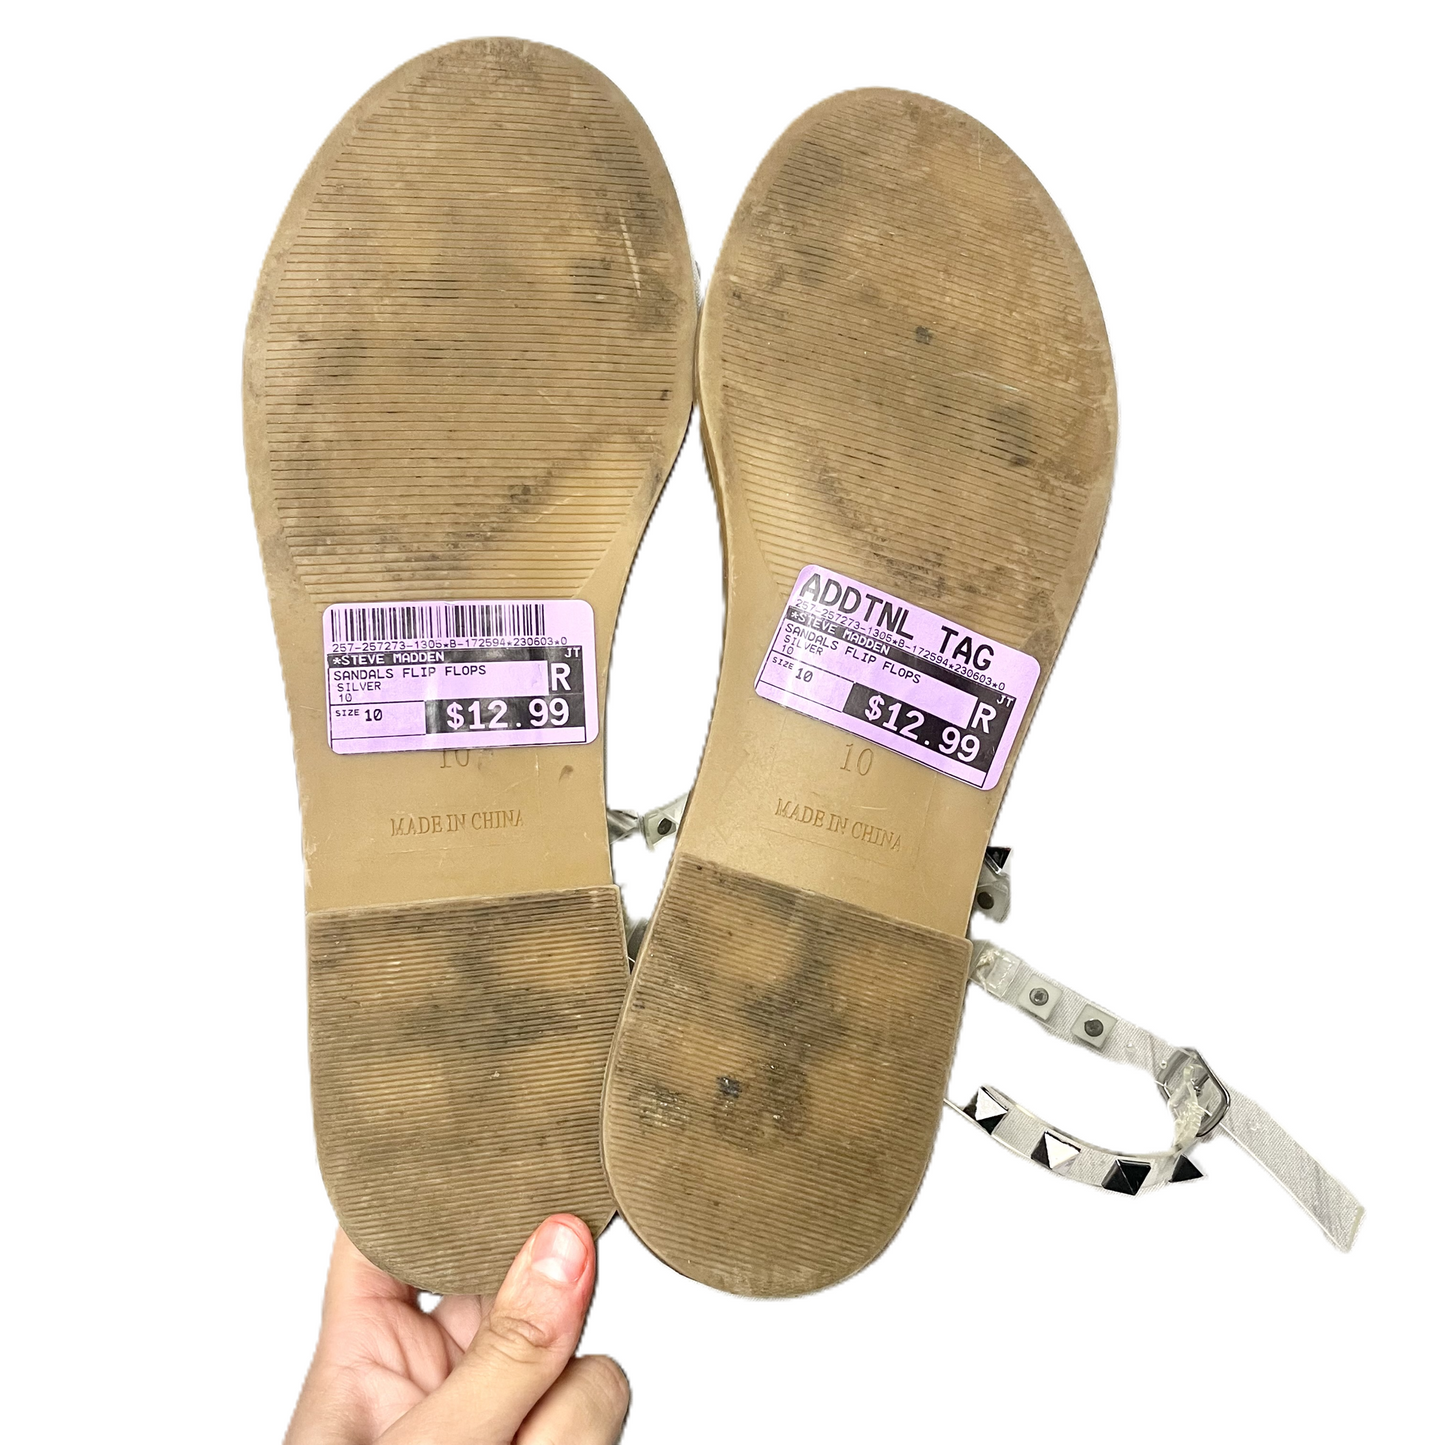 Sandals Flip Flops By Steve Madden  Size: 10